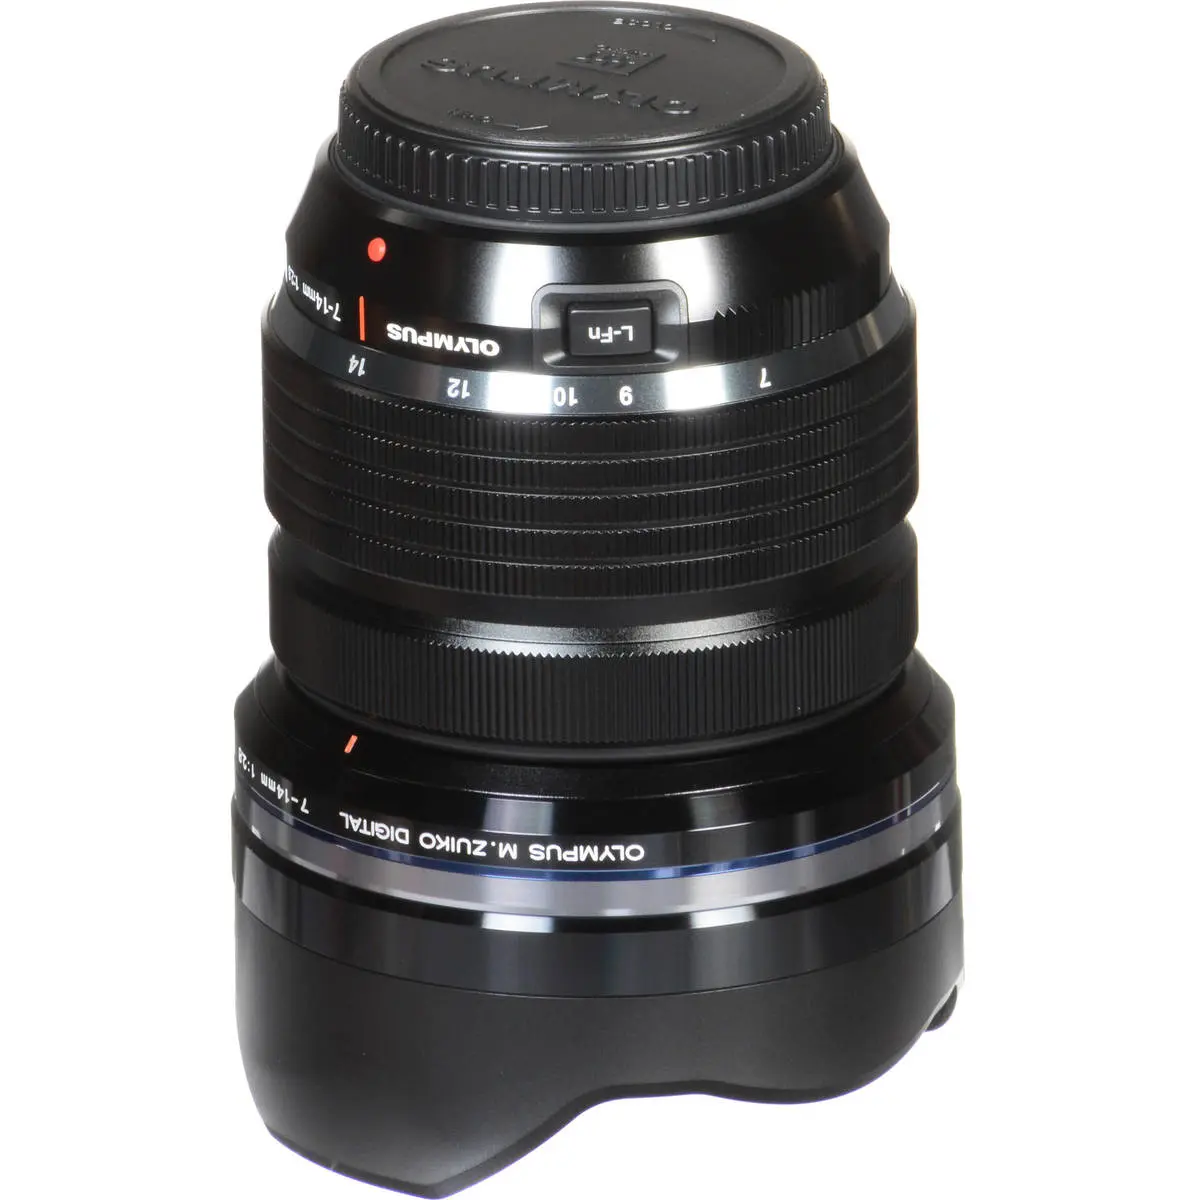 8. Olympus M.ZUIKO DIGITAL ED 7-14mm F2.8 PRO Lens